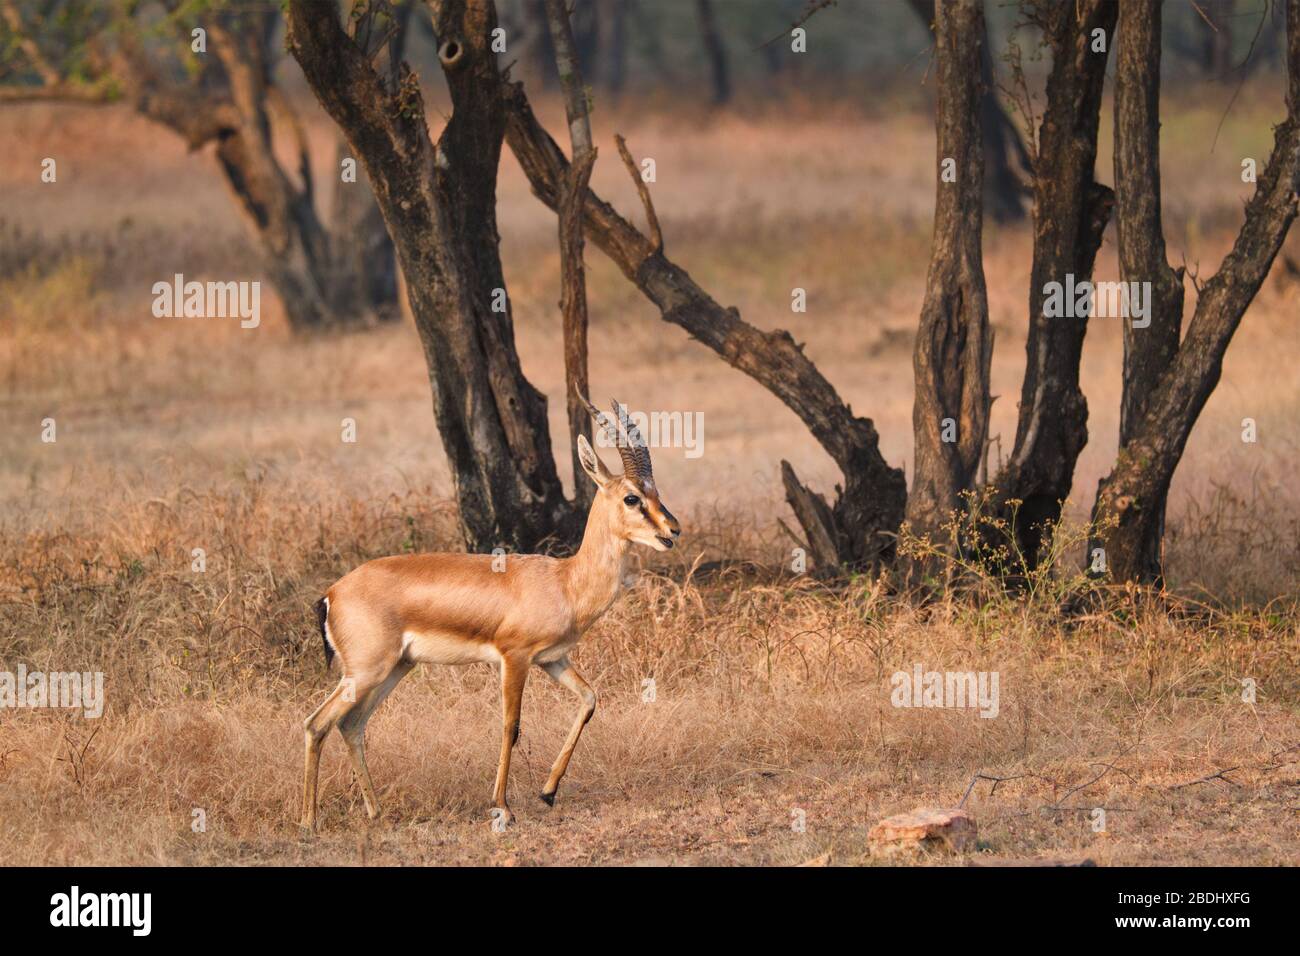 Indian bennetti gazelle or chinkara in Rathnambore National Park, Rajasthan, India Stock Photo